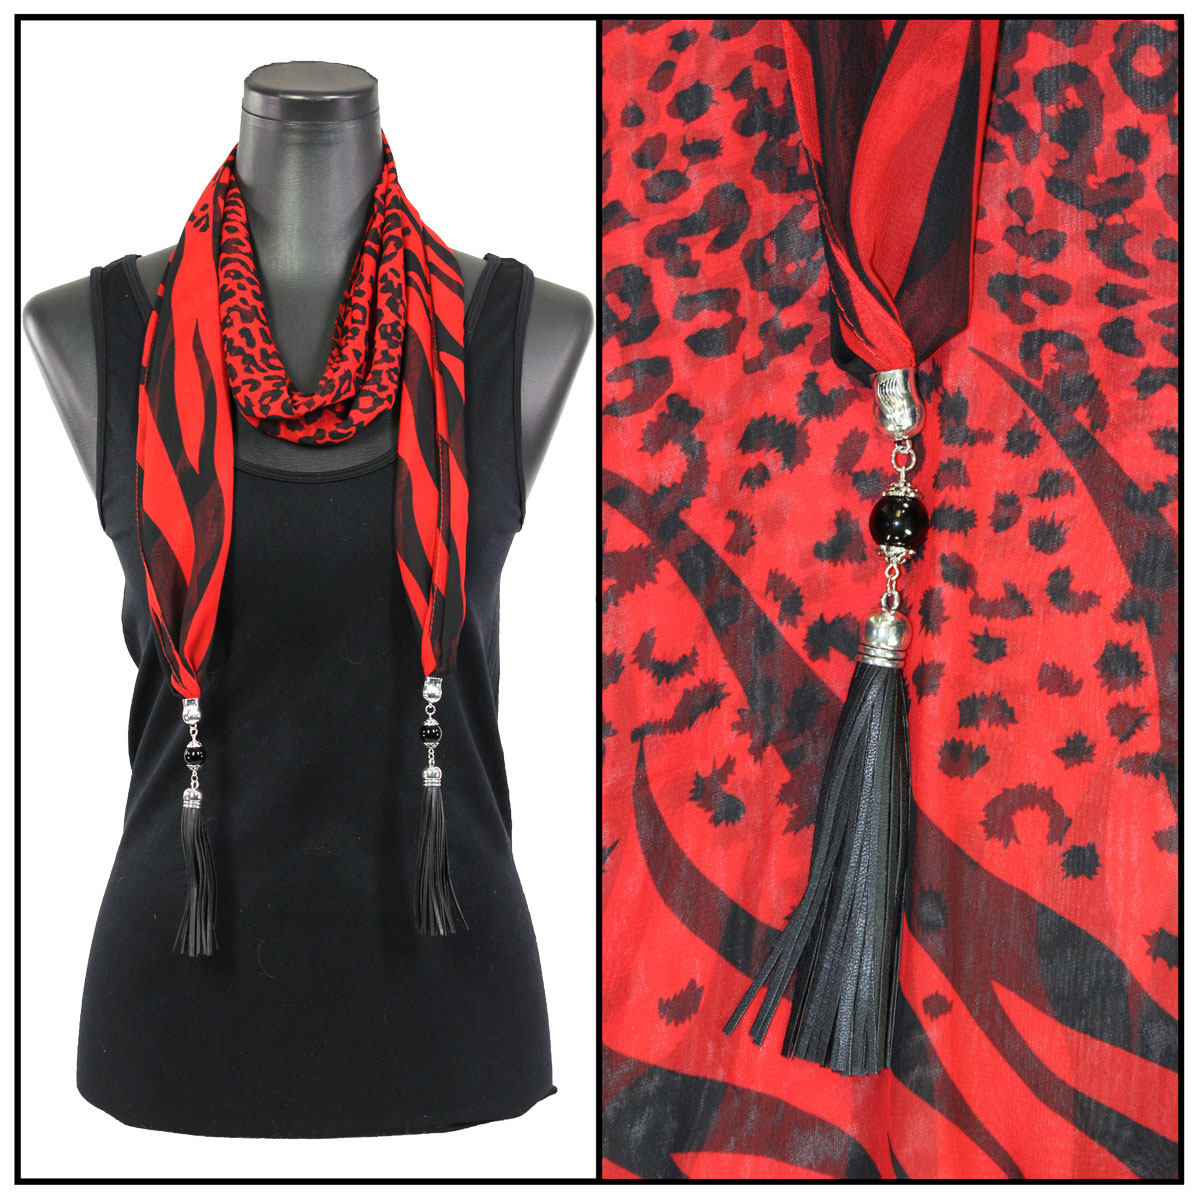 Zebra-Cheetah - Black-Red<br>
Leather Tassels